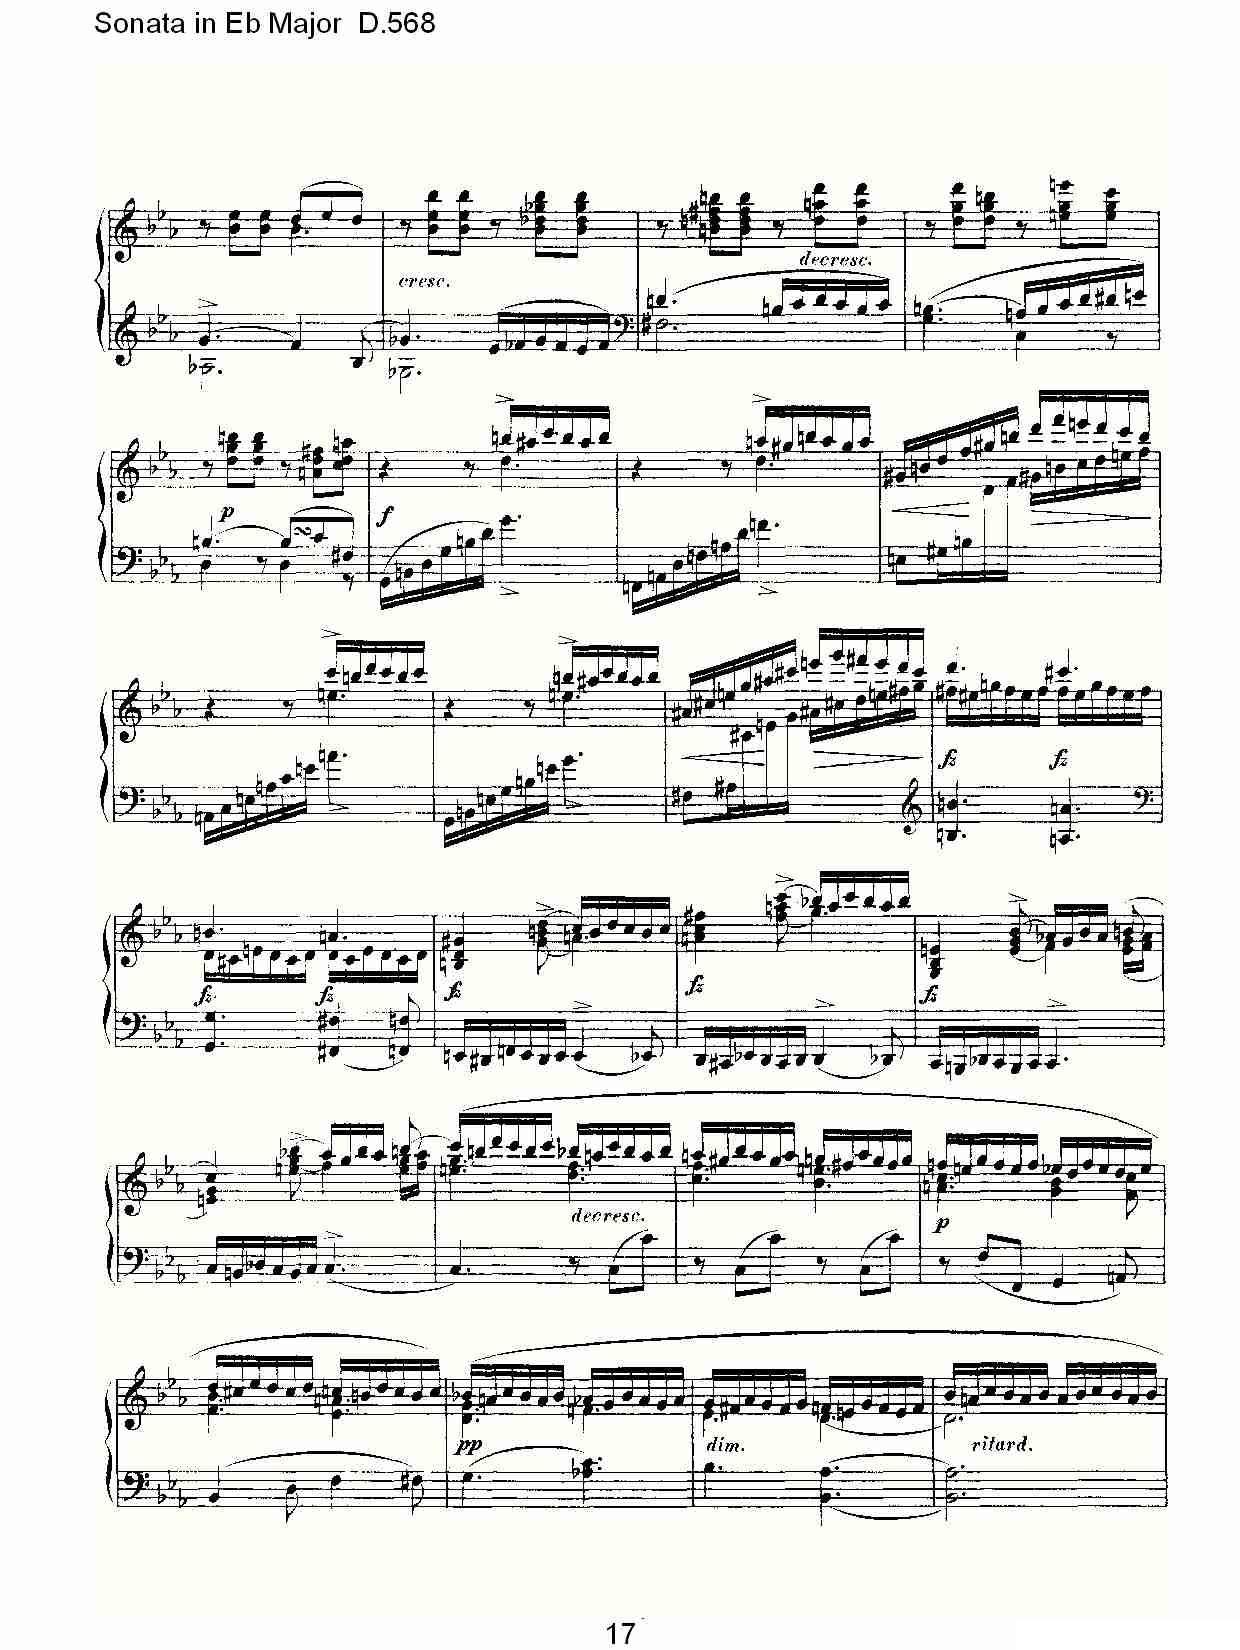 Sonata in Eb Major D.568（Eb大调奏鸣曲 D.568）钢琴曲谱（图17）